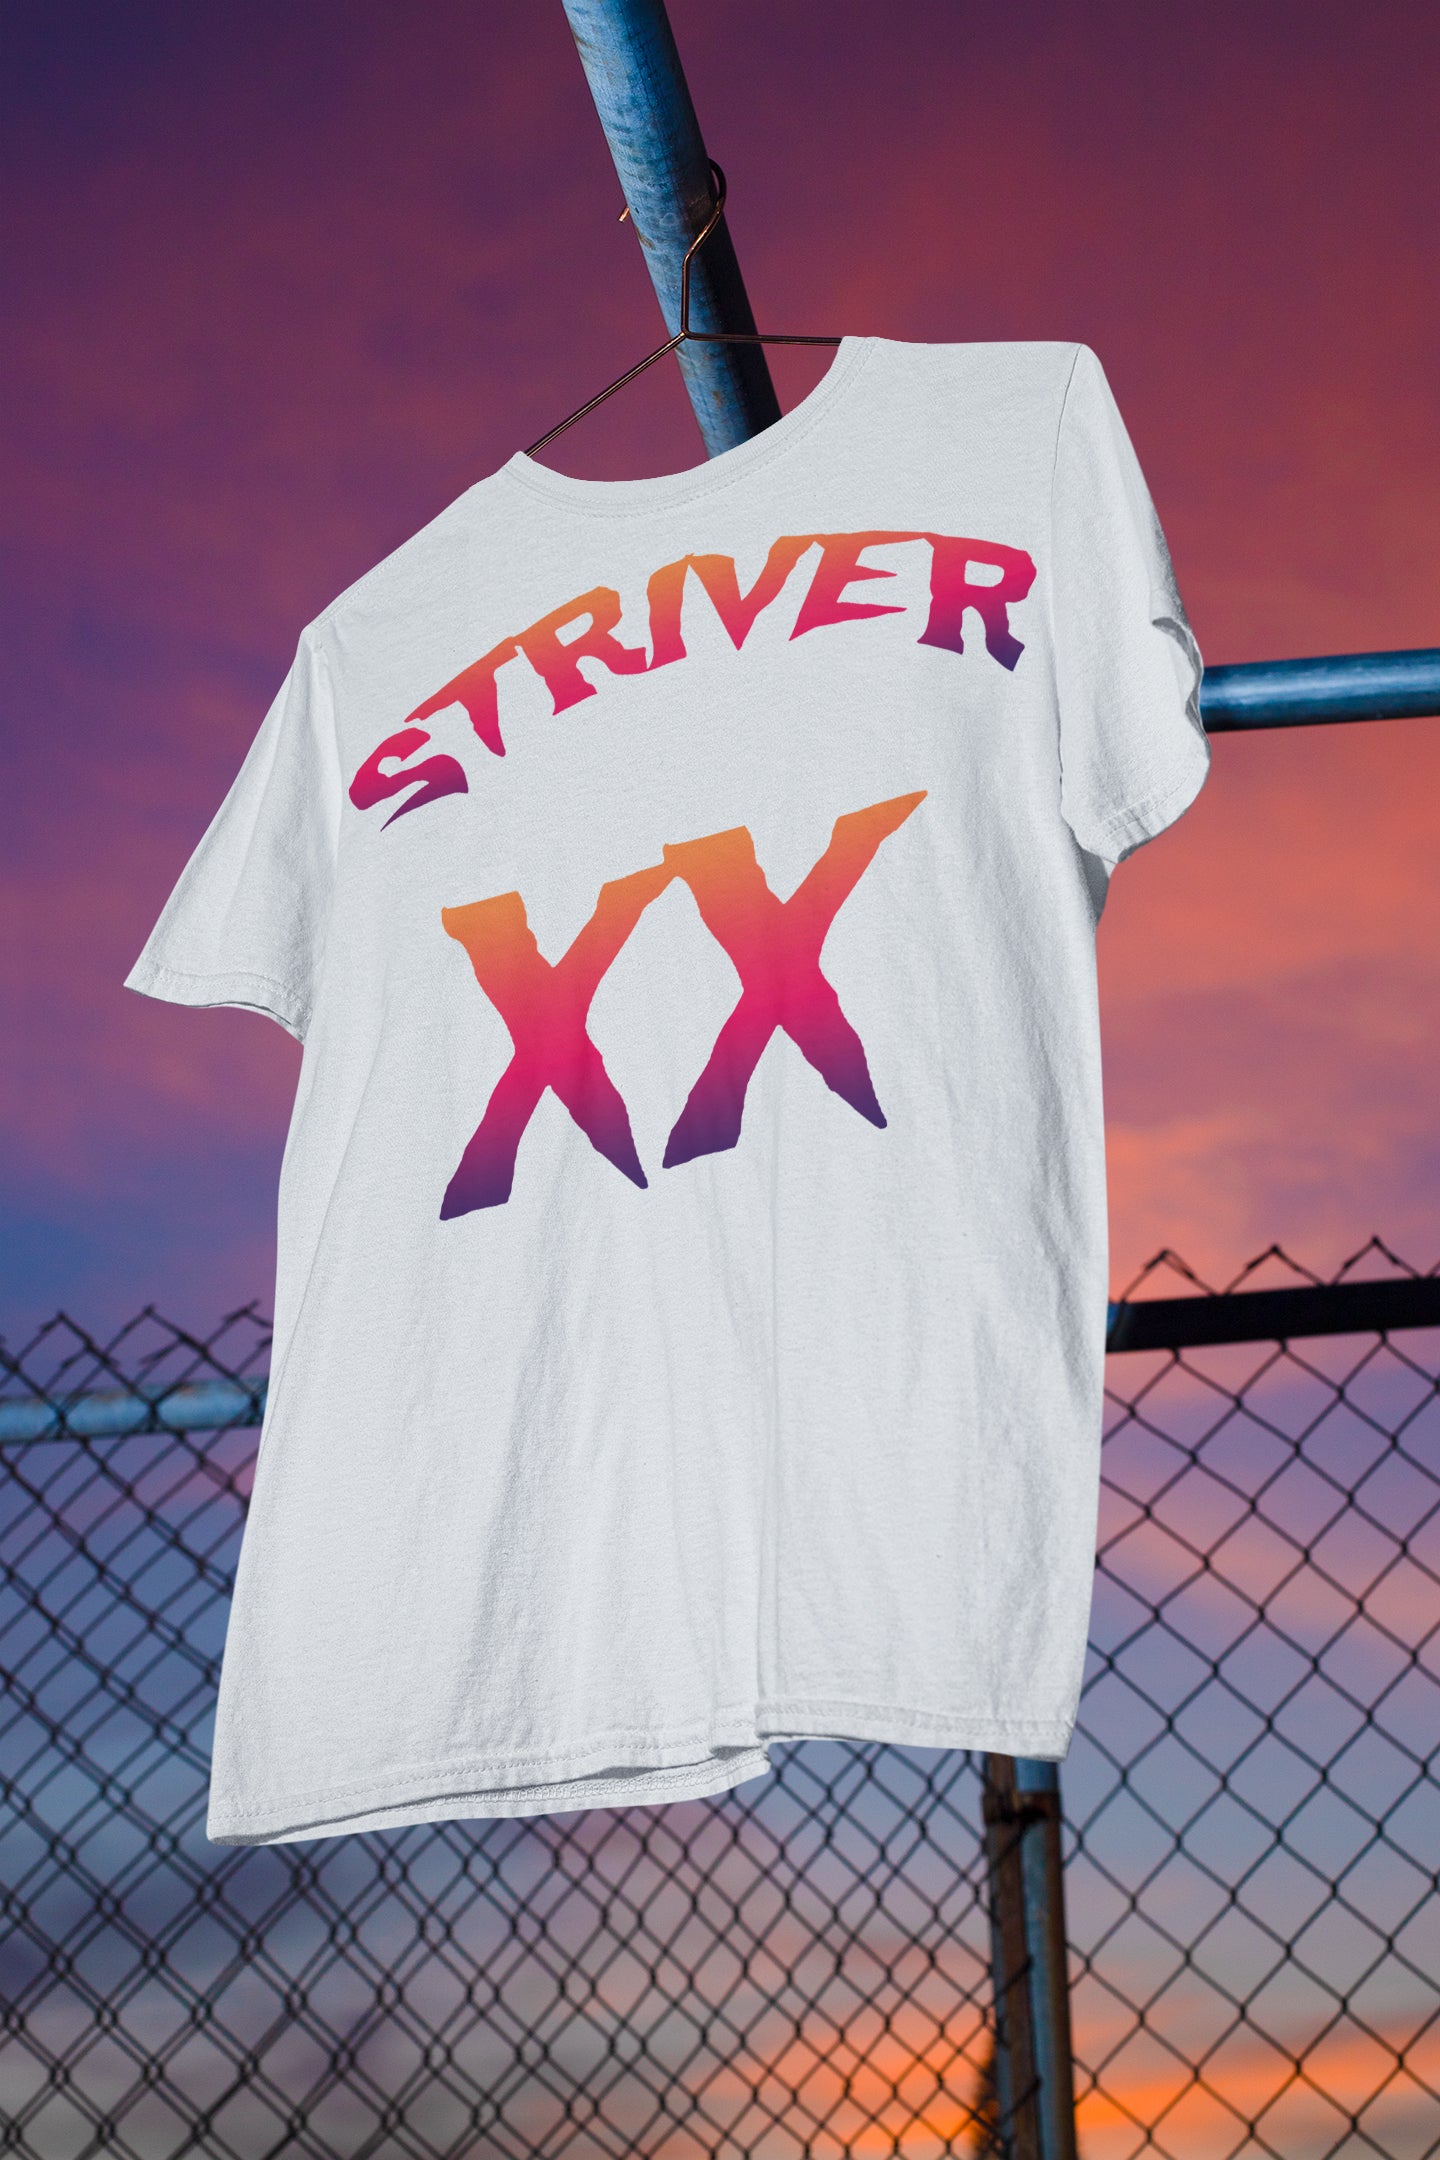 ATR | STRIVER XX White Short Sleeve Tee